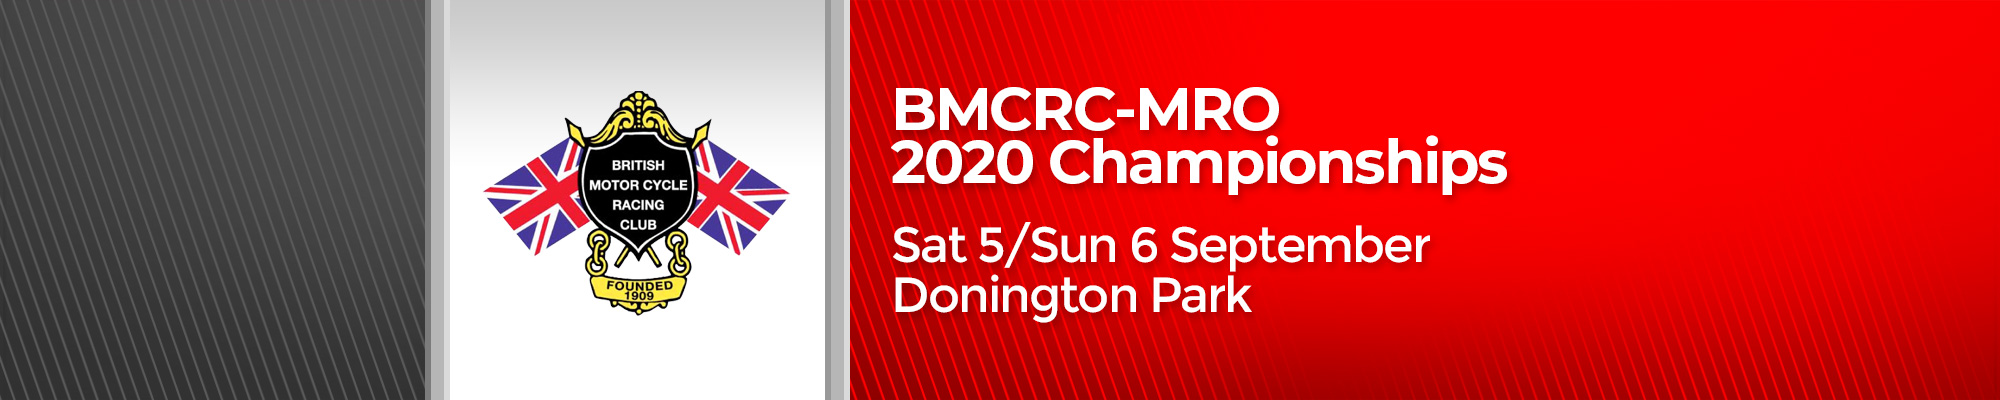 BMCRC-MRO 2020 Championships